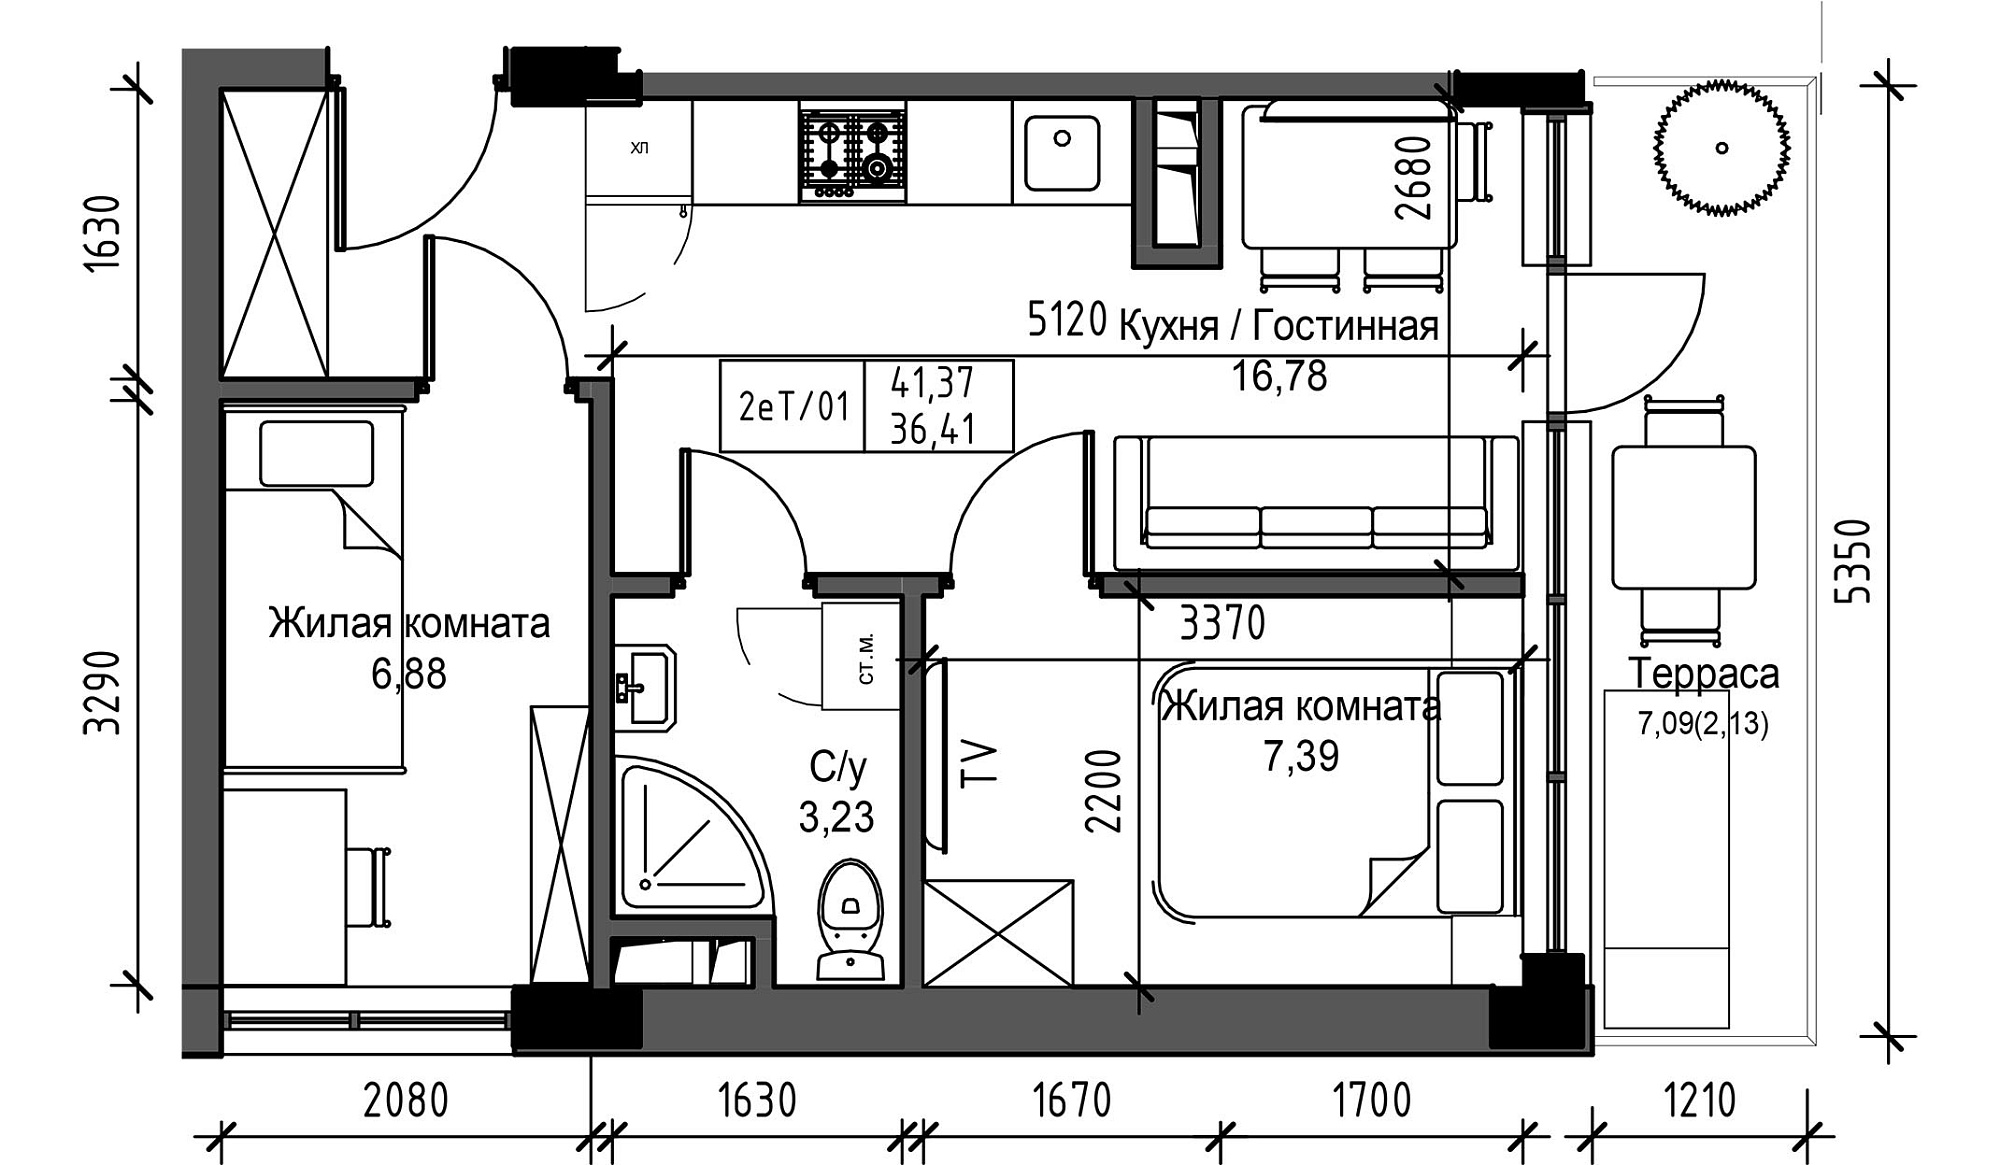 Планування 2-к квартира площею 36.41м2, UM-003-10/0106.